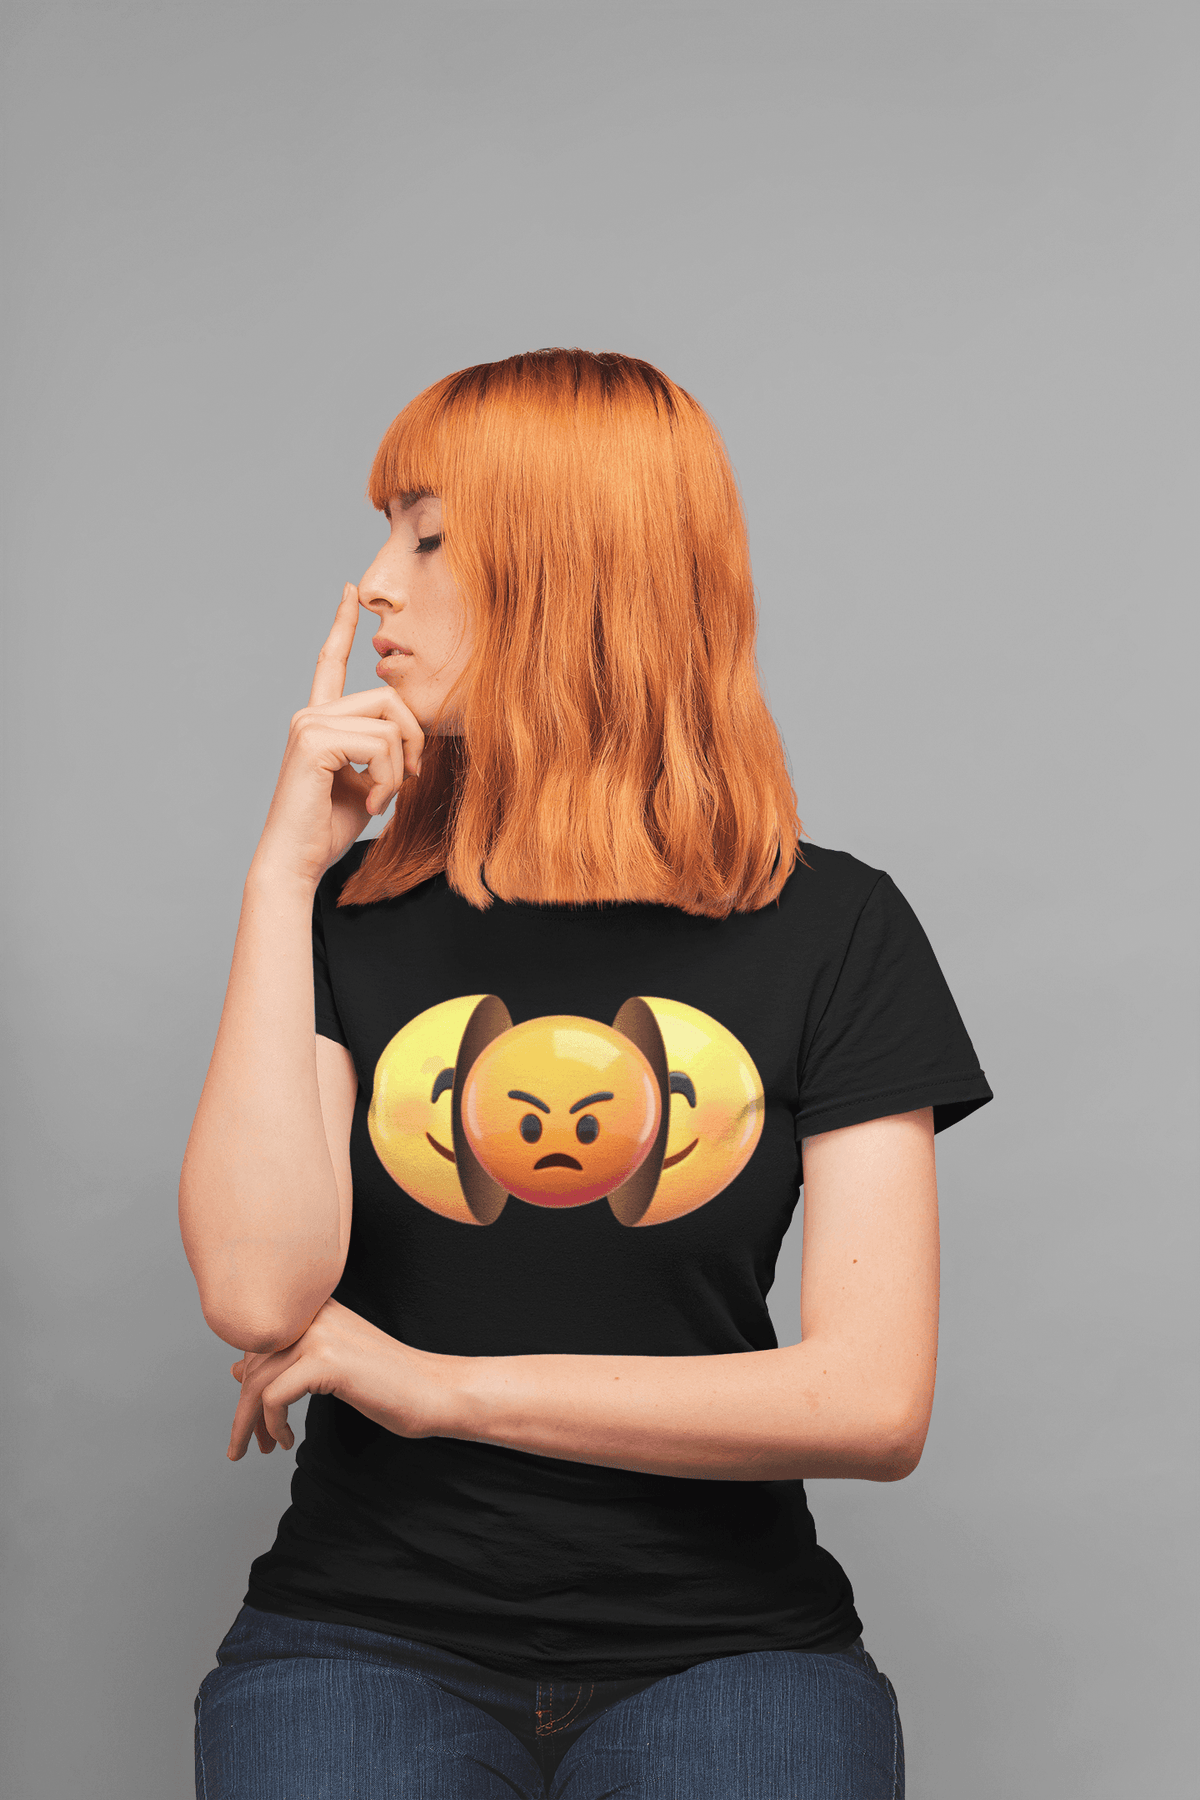 Emoji Happy Outside Angry Inside T-shirt - StylinArt